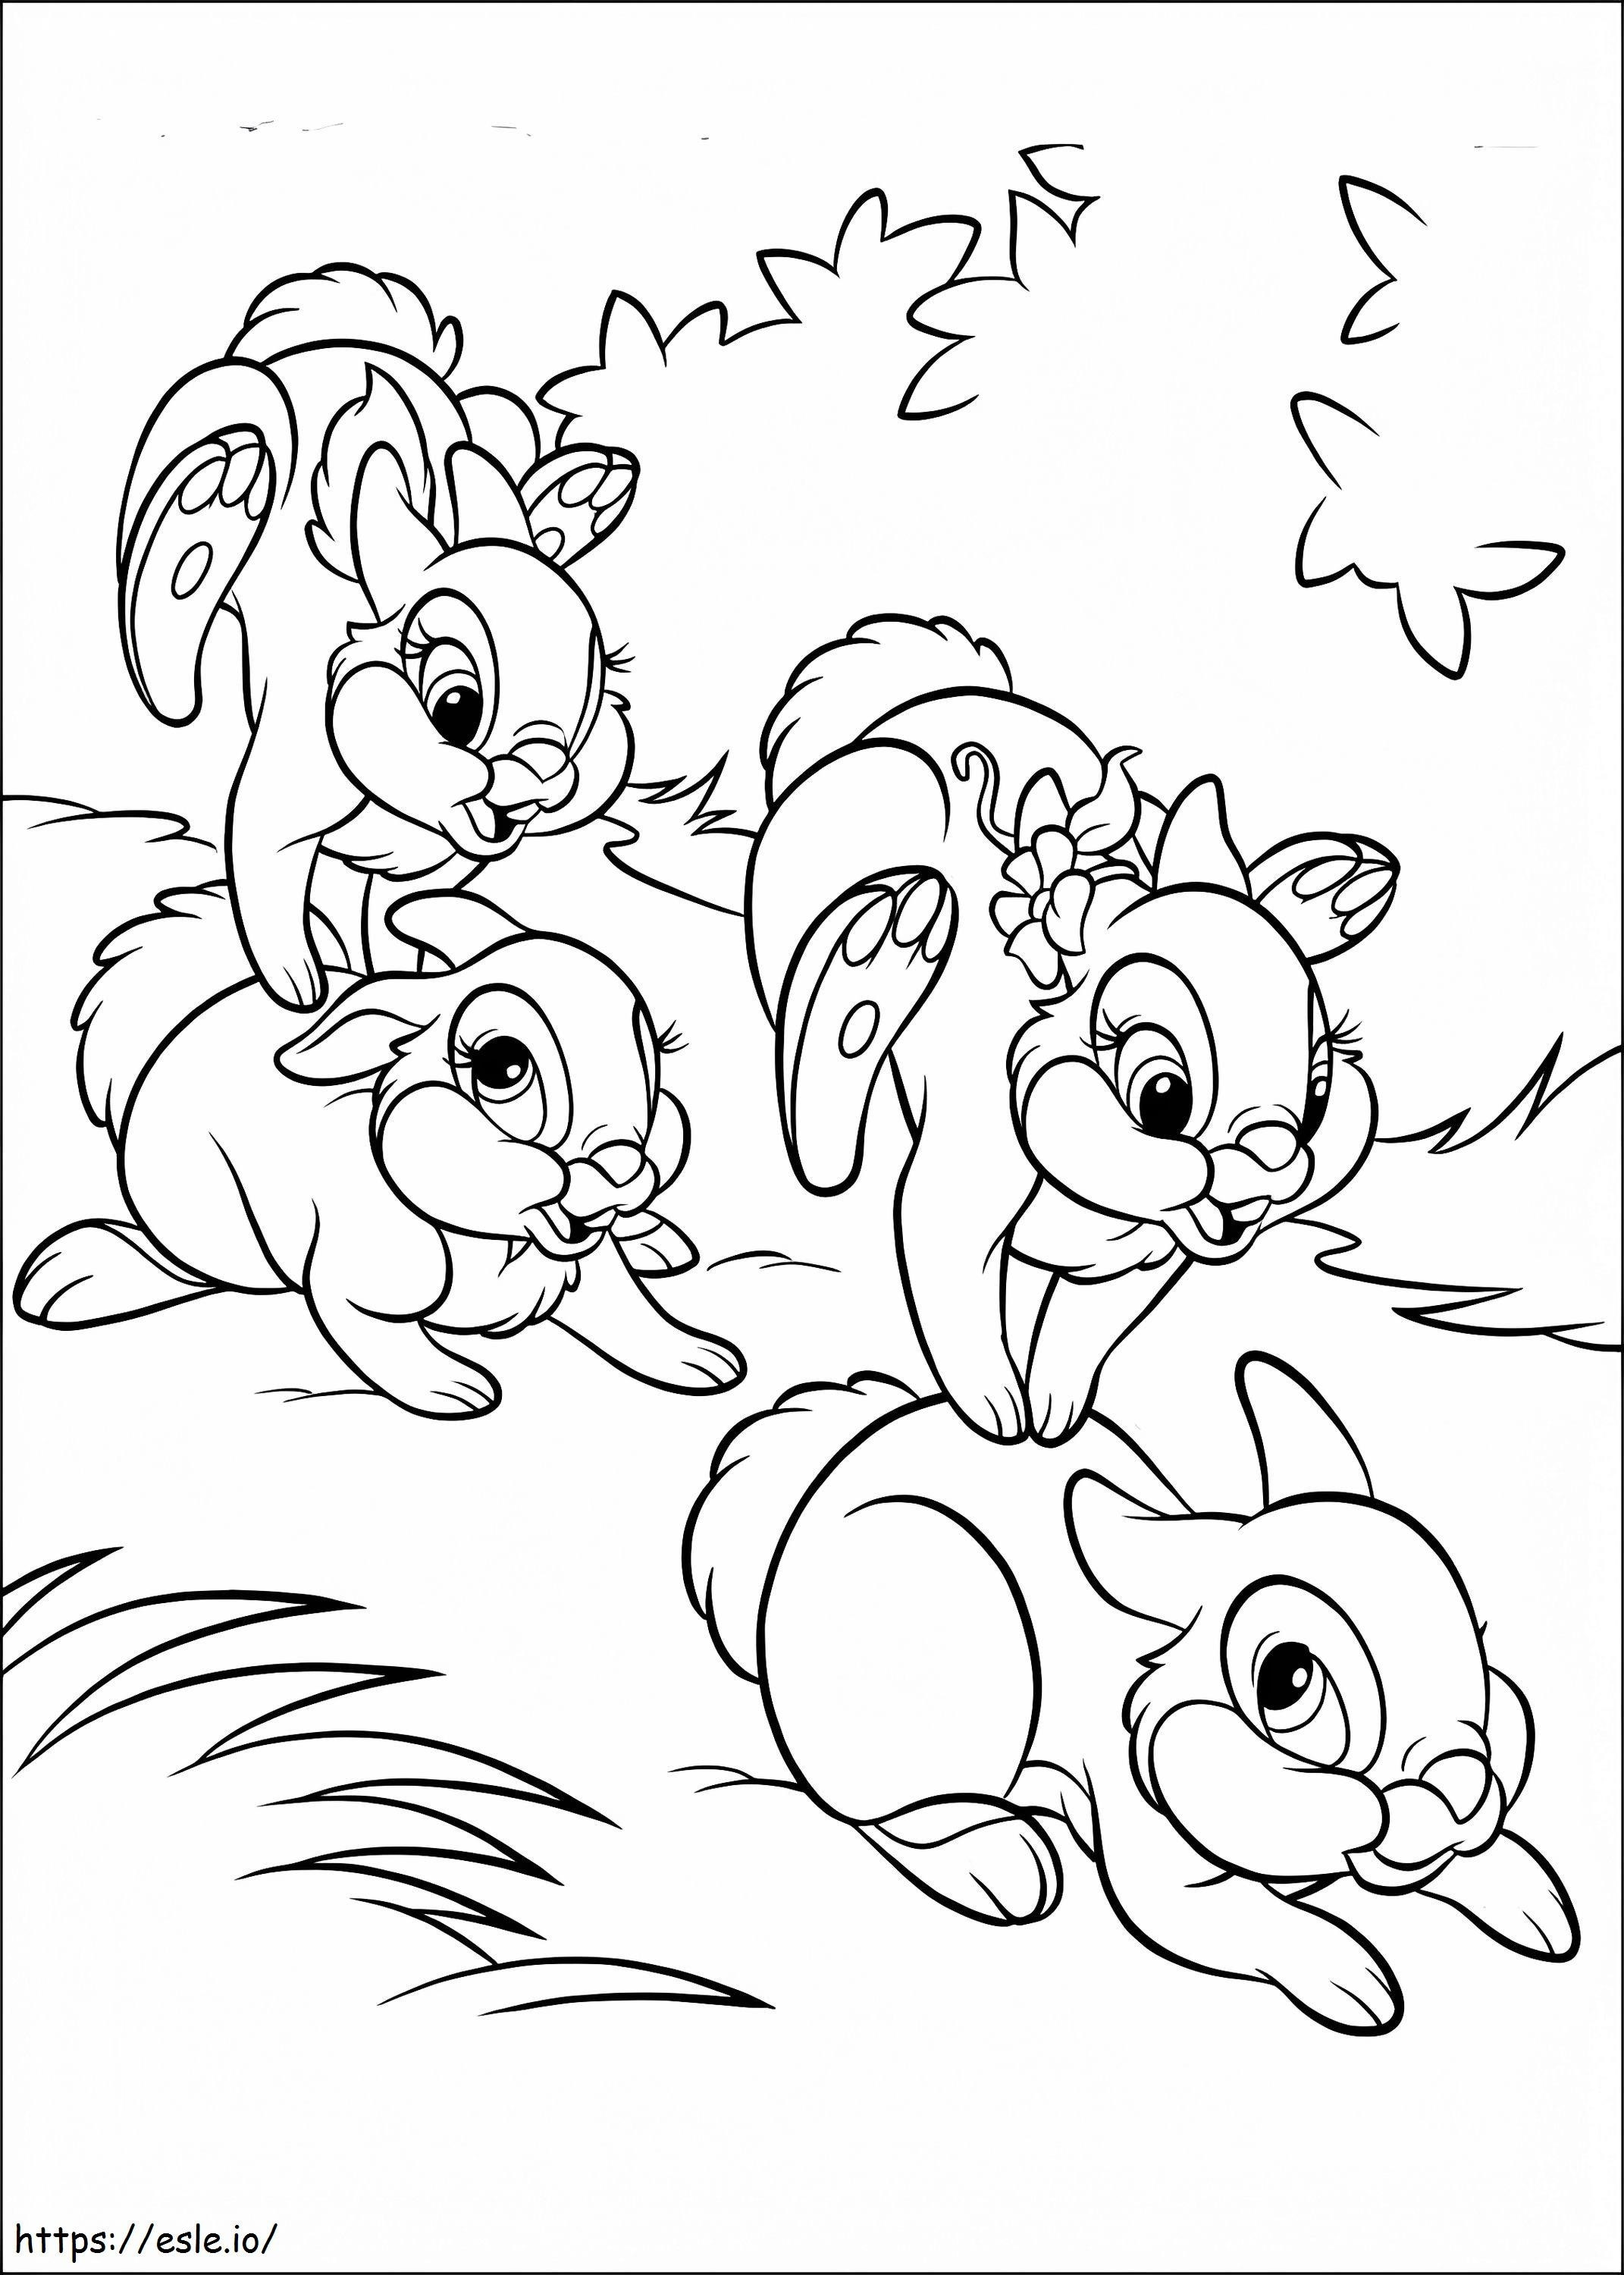 Quatro coelhos correndo para colorir